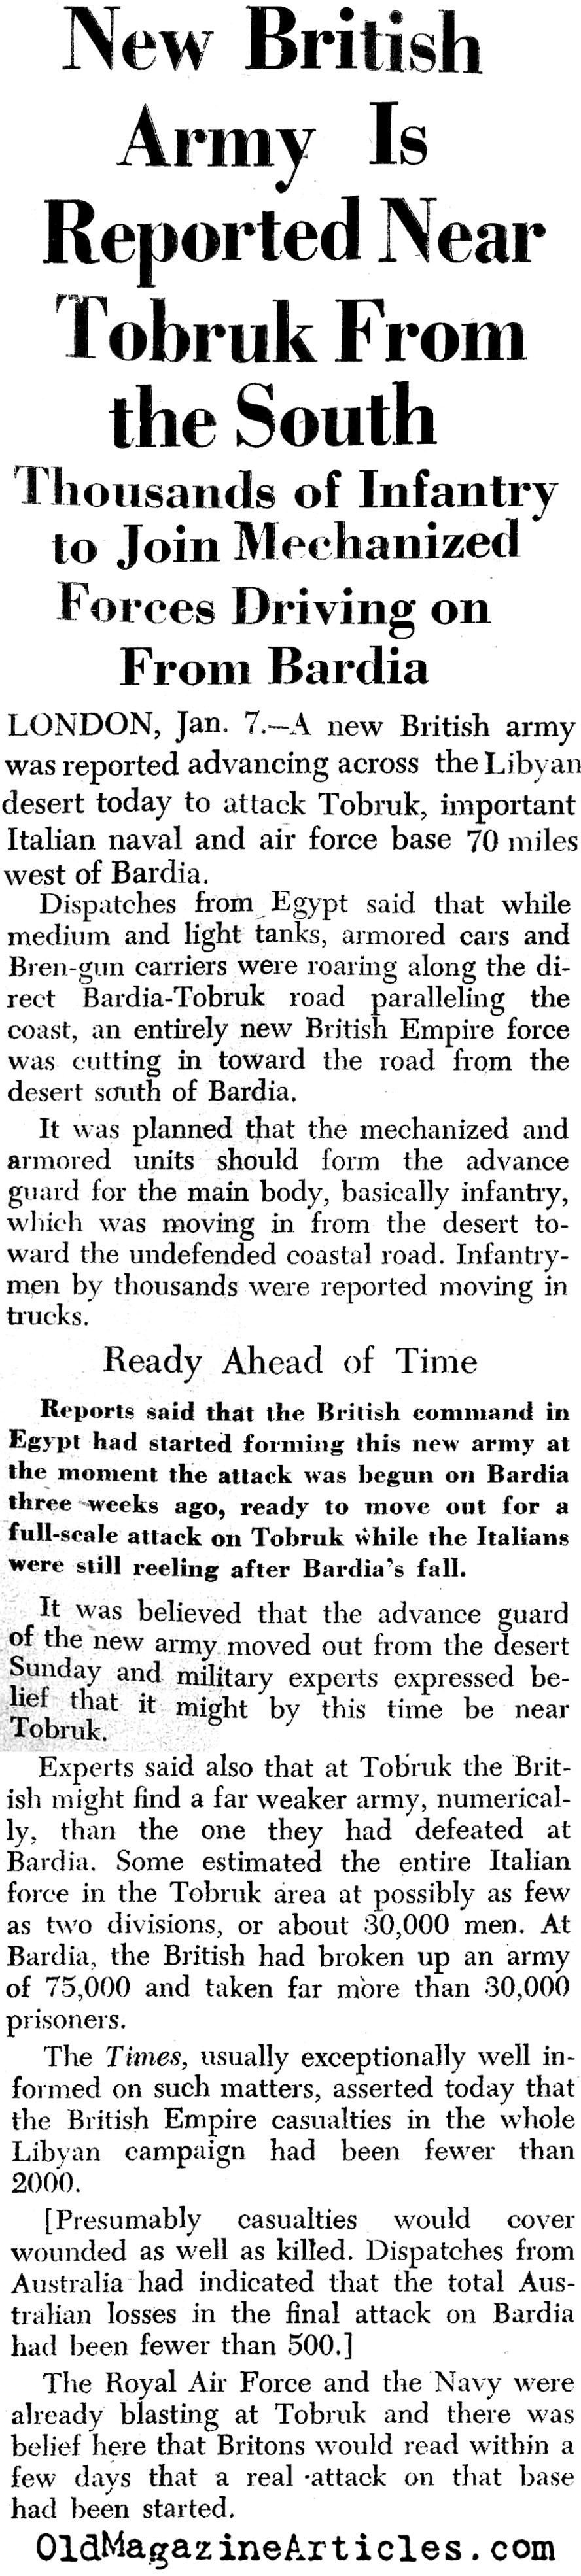 The British Move On Tobruk (PM Tabloid, 1941)